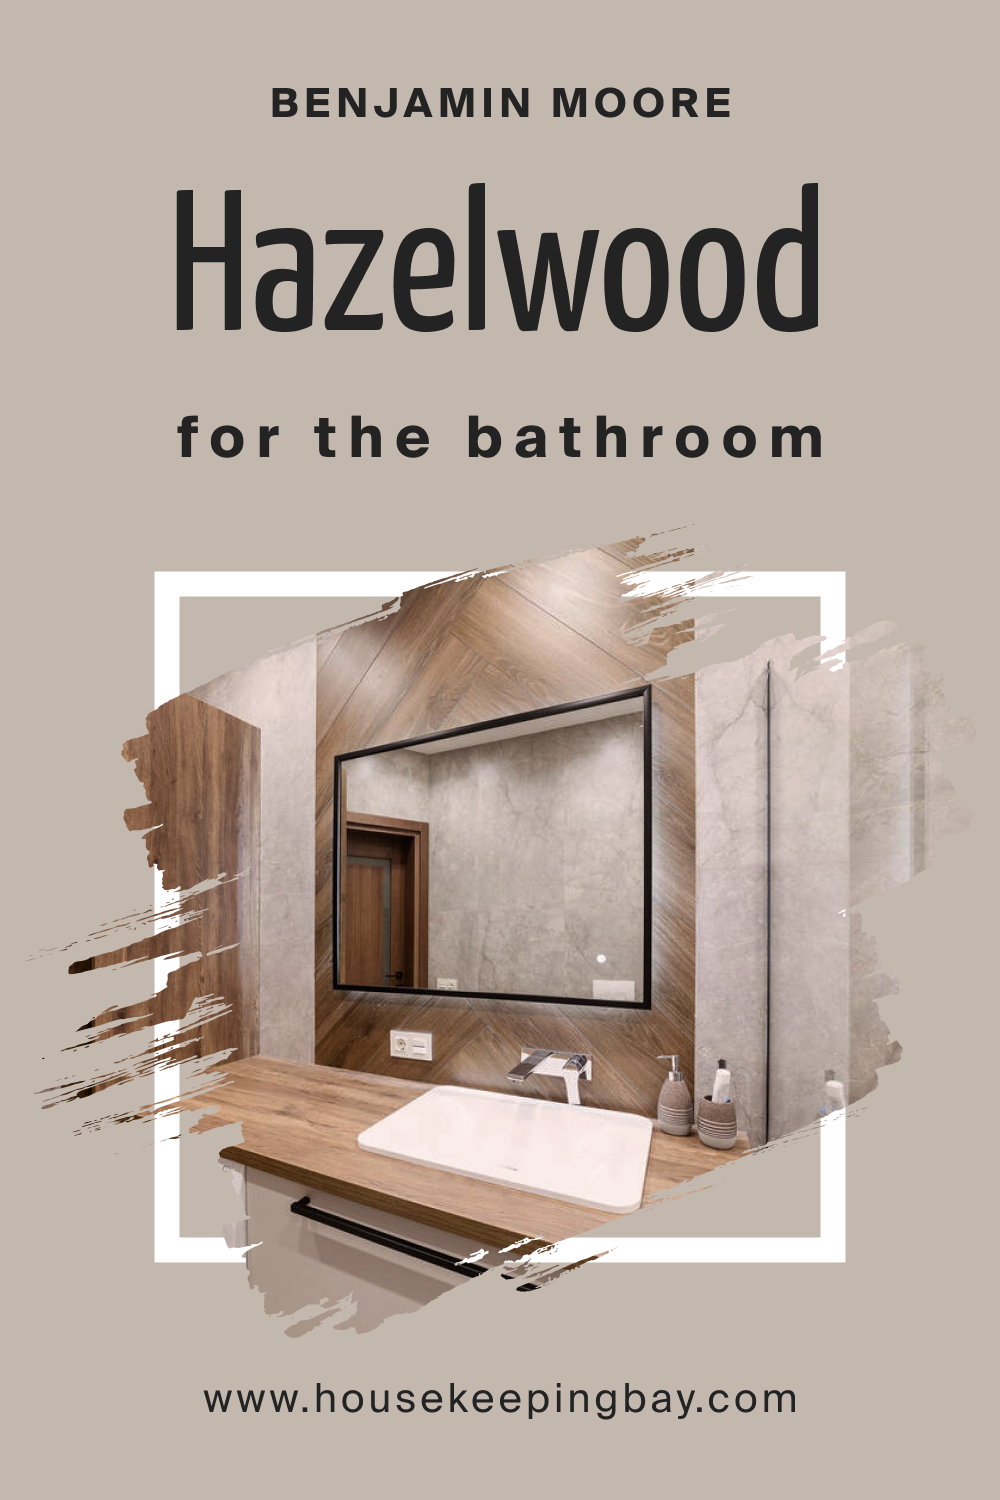 Benjamin Moore. BM Hazelwood 1005 in the Bathroom